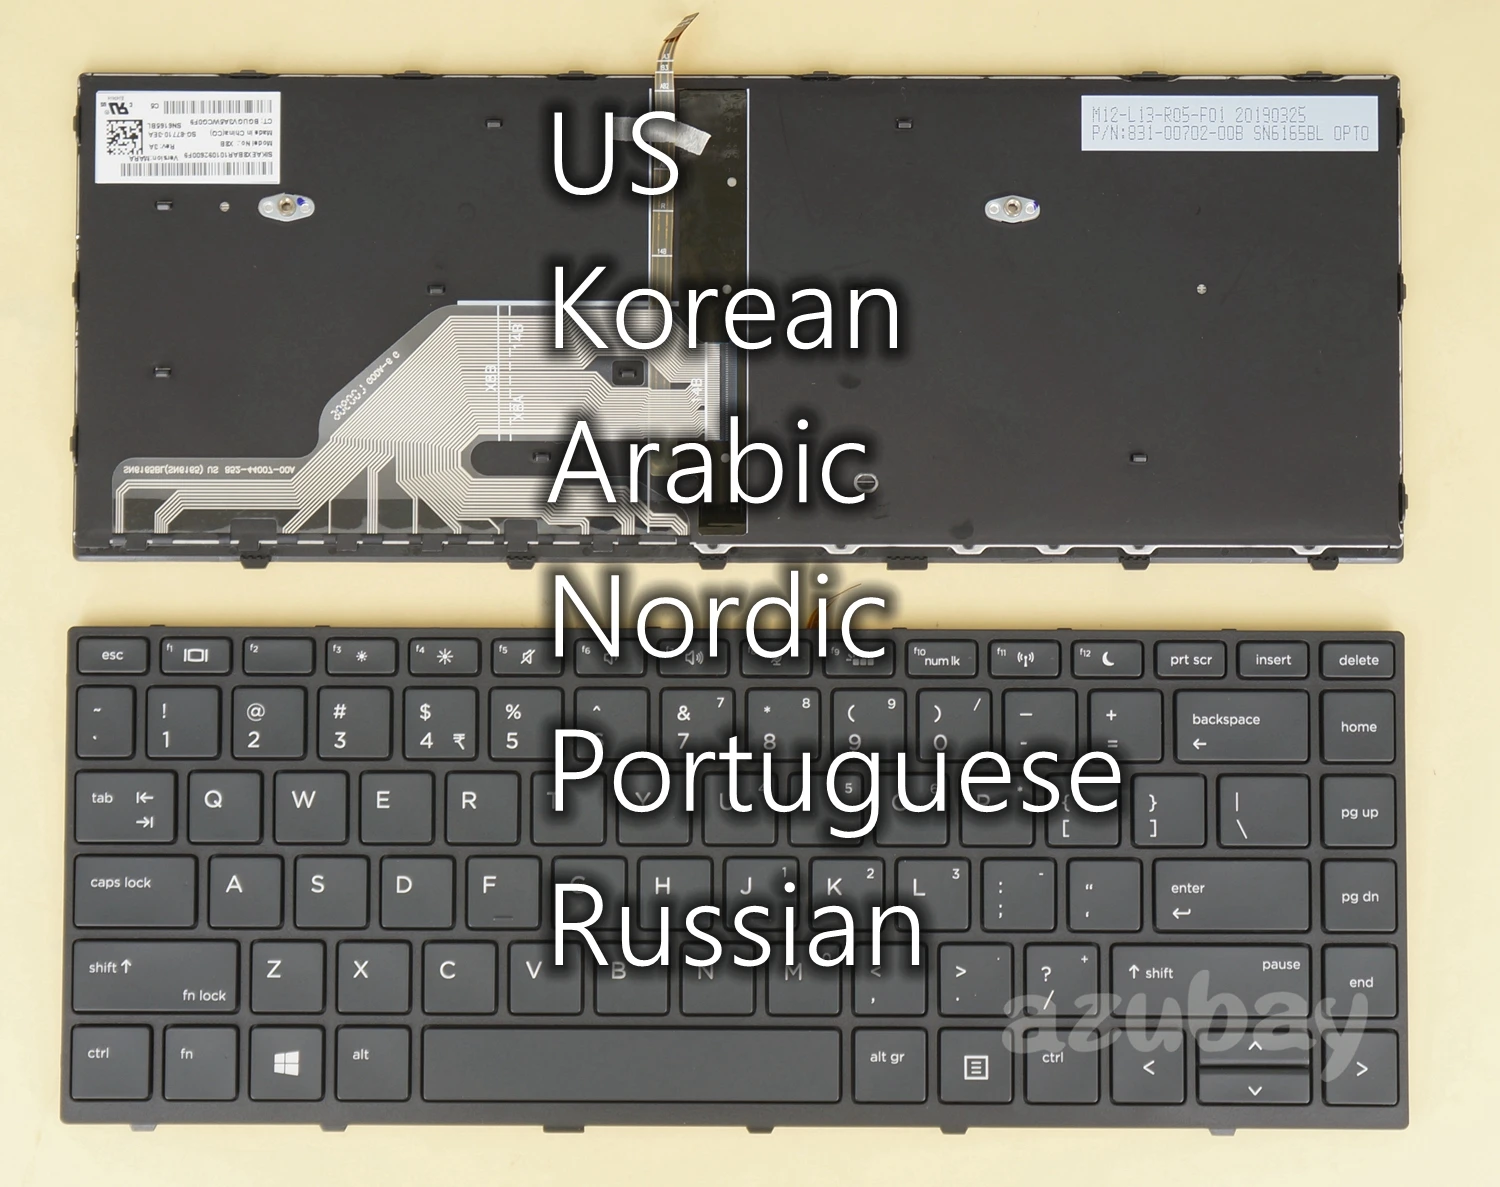 US Russian Korean Arabic Nordic SD FI Portuguese Keyboard for HP Probook 430 G5 440 G5 445 G5, ZHAN 66 Pro G1 SN6165BL Backlit